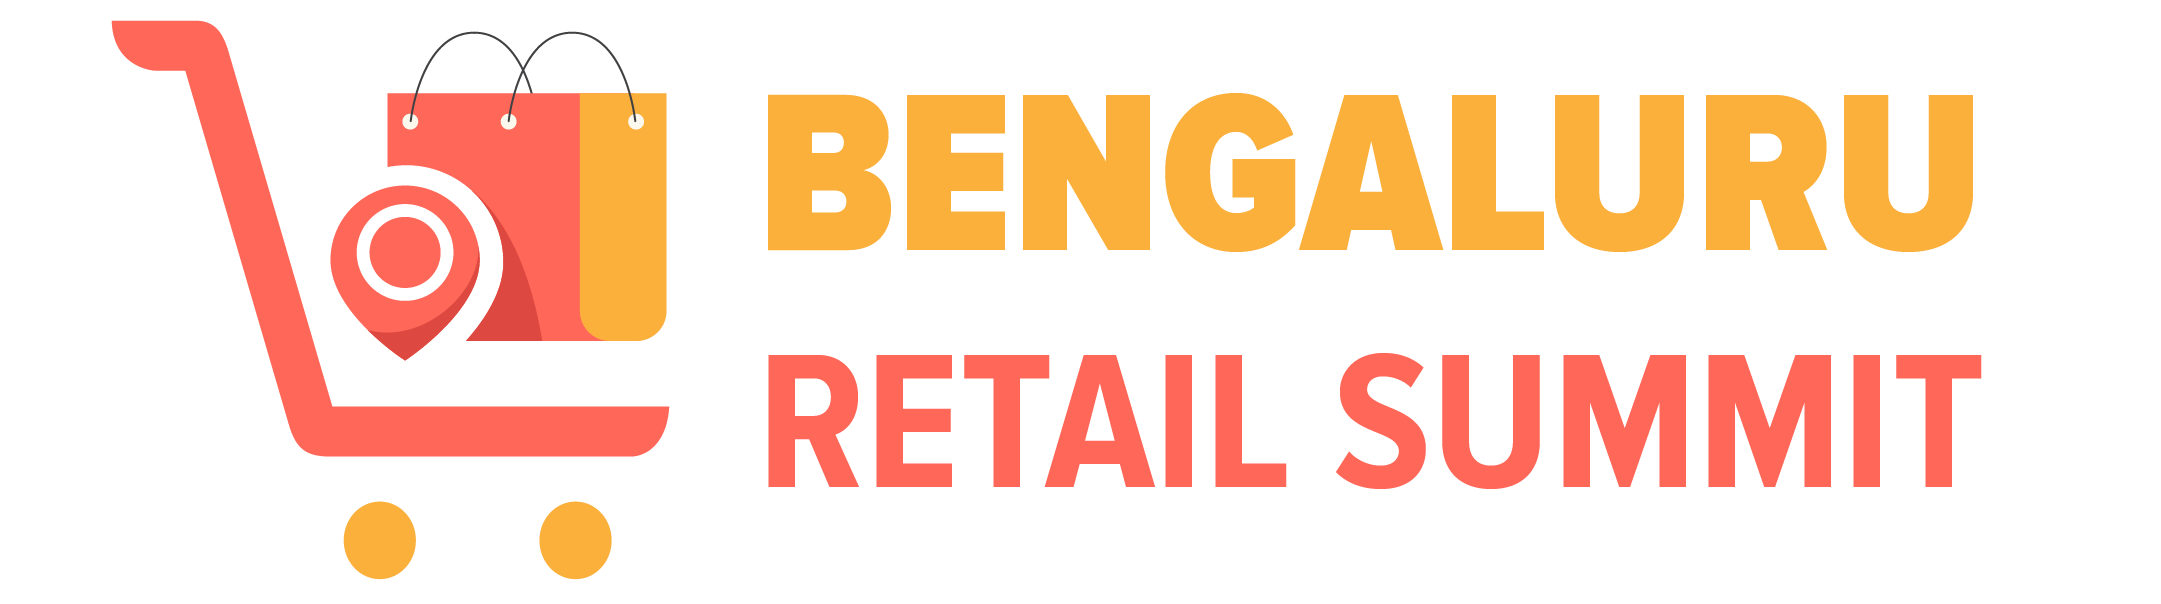 Bengaluru Retail Summit